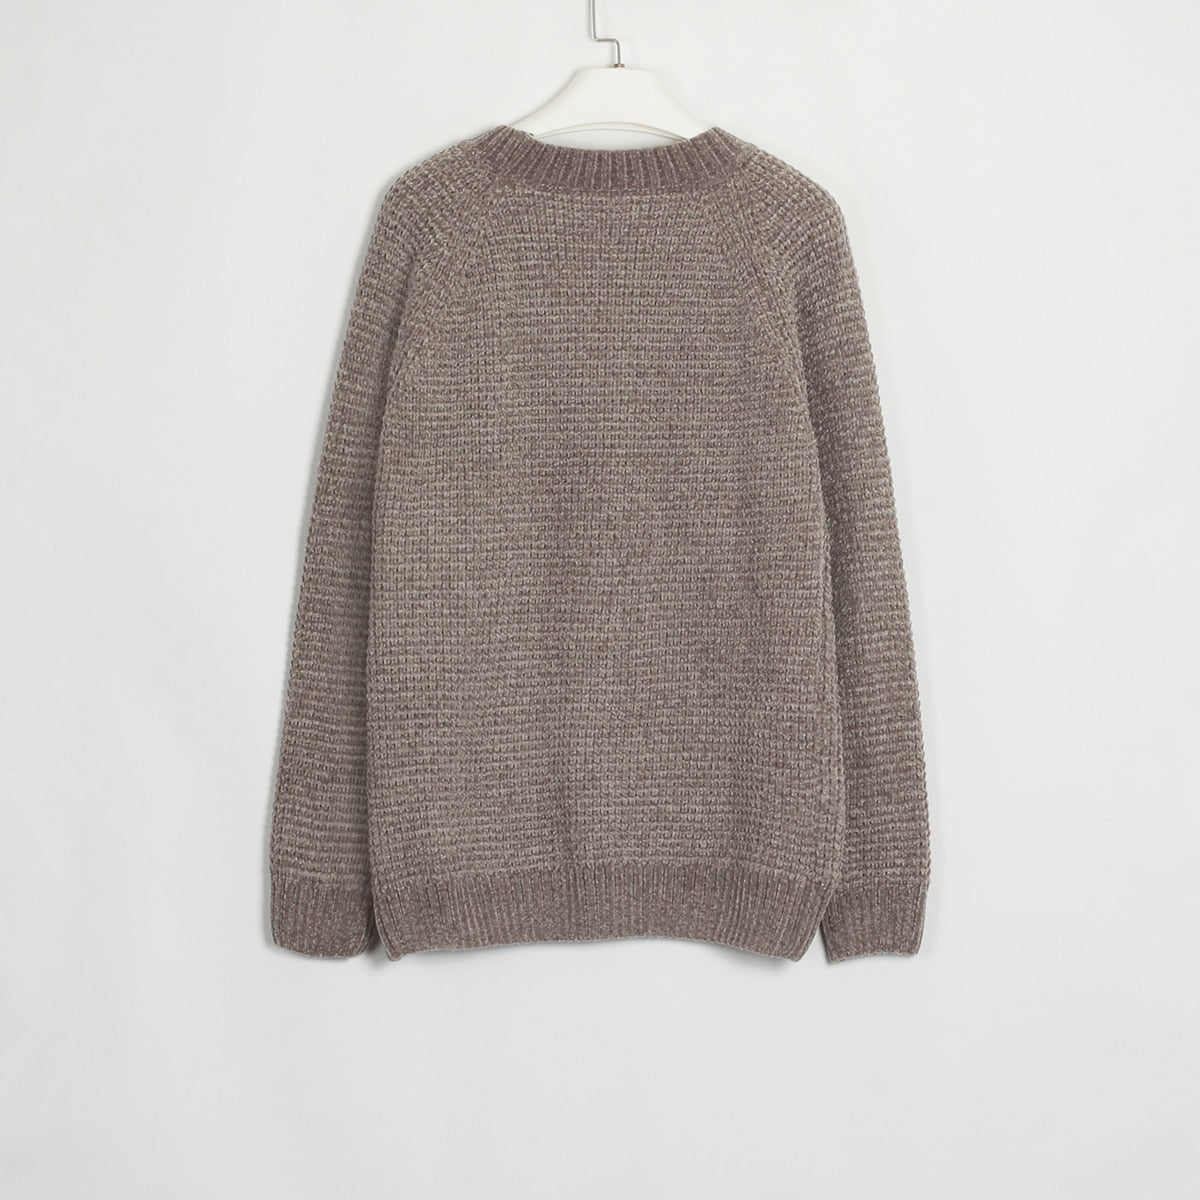 Long Sleeve Plain Knit Casual Sweater